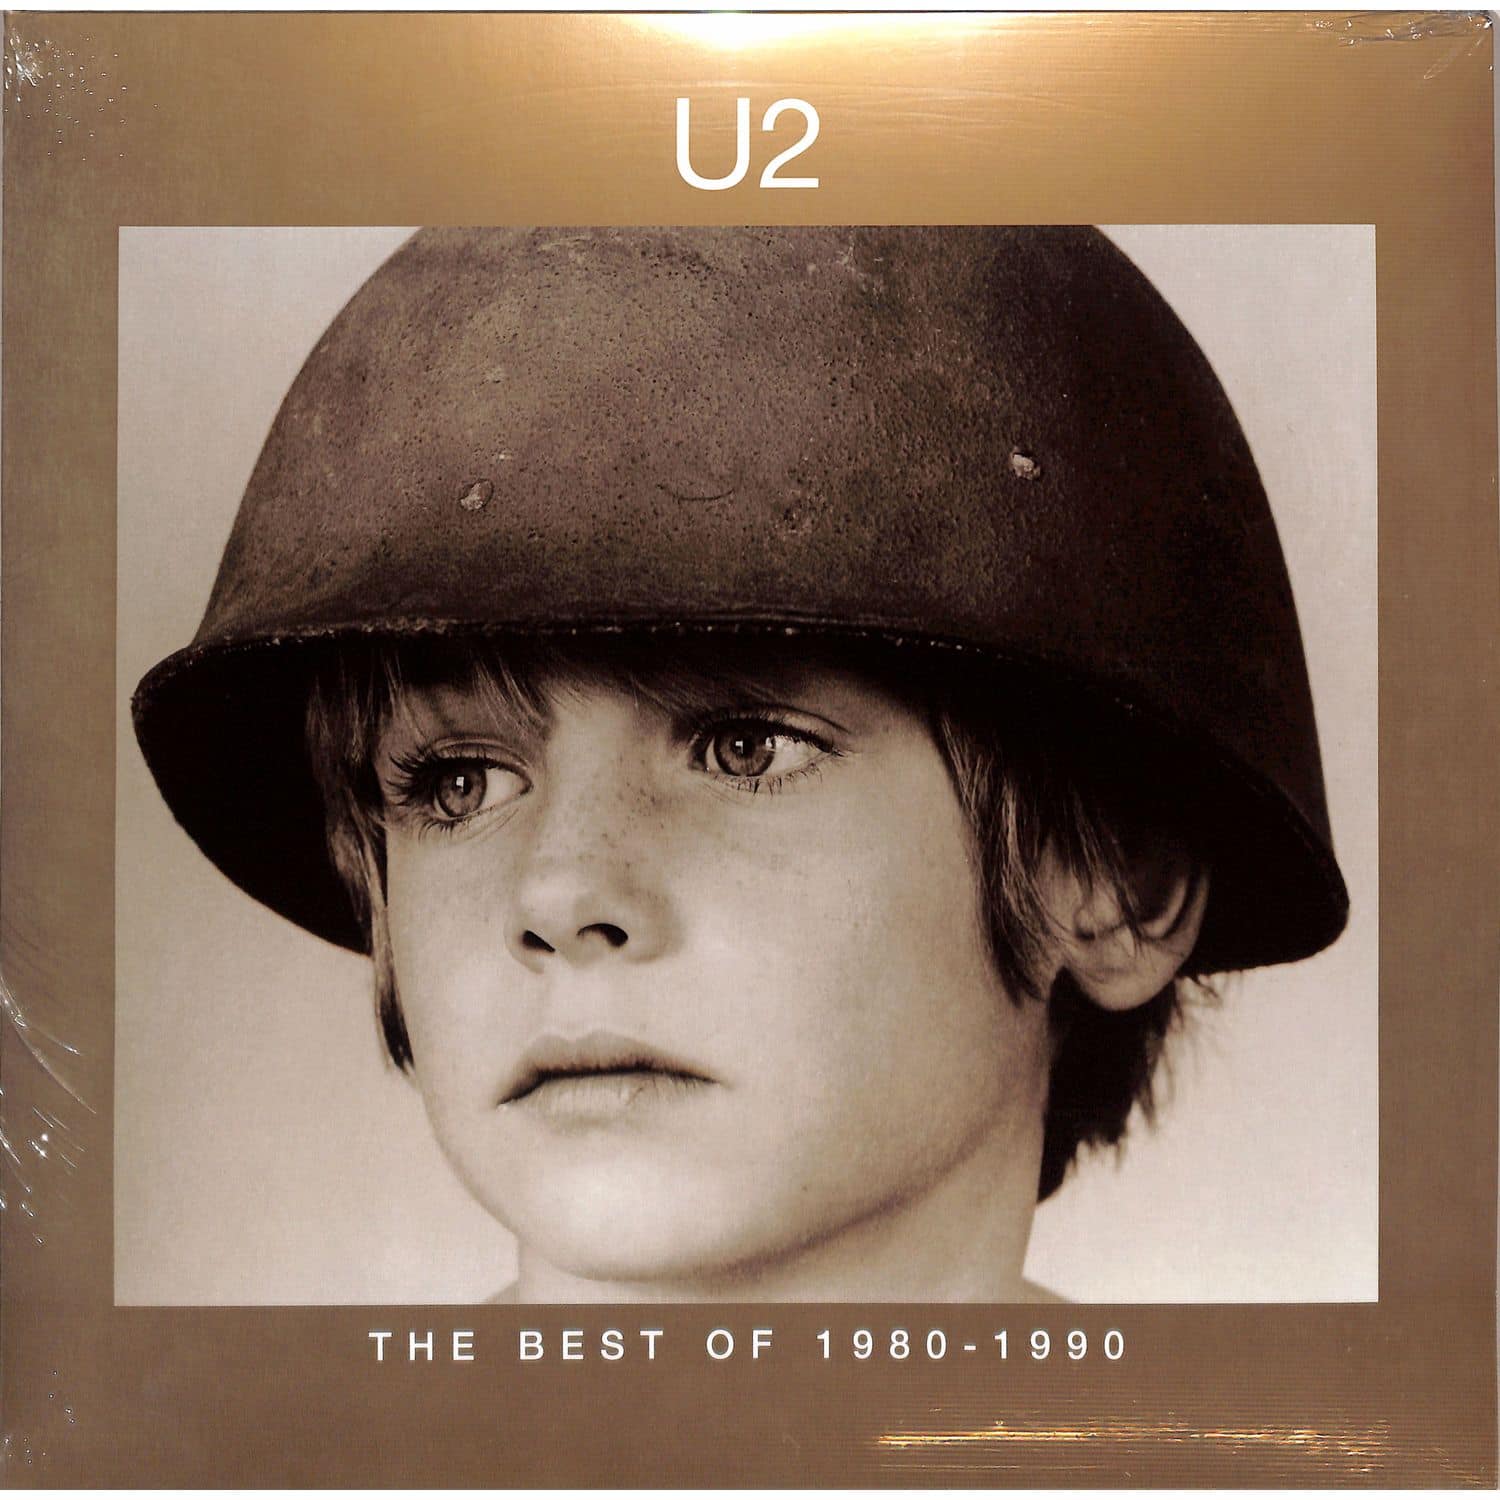 U2 - THE BEST OF 1980 - 1990 